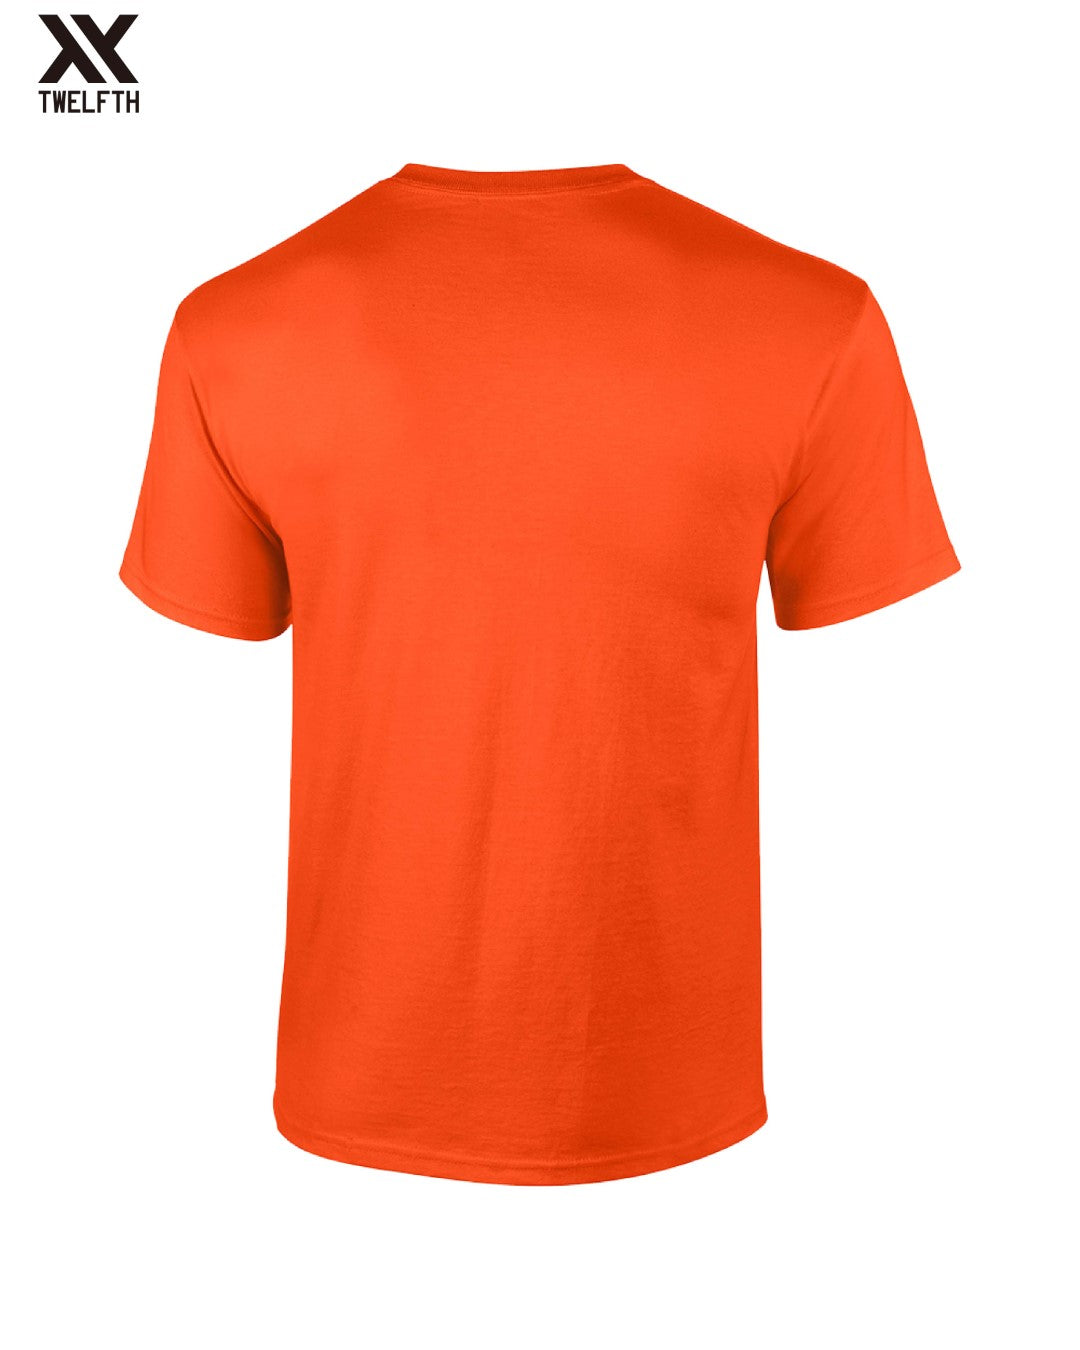 Netherlands Crest T-Shirt - Mens